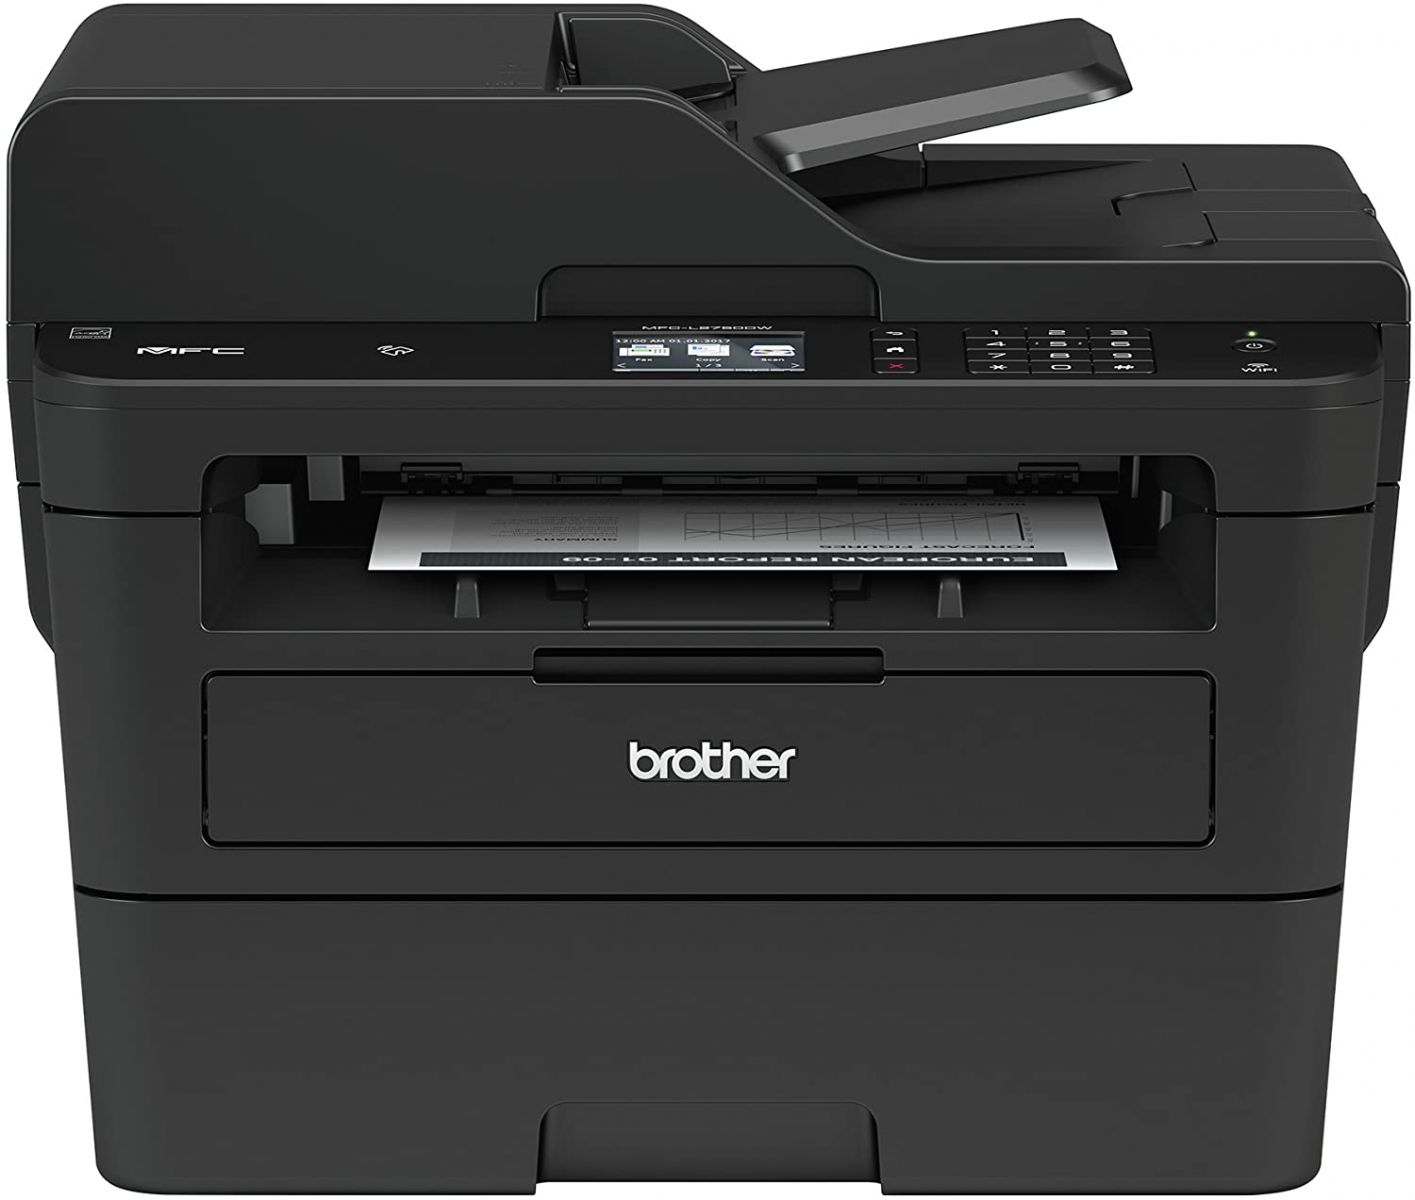 Image of a Brother MFC-L2750DW Laser Printer